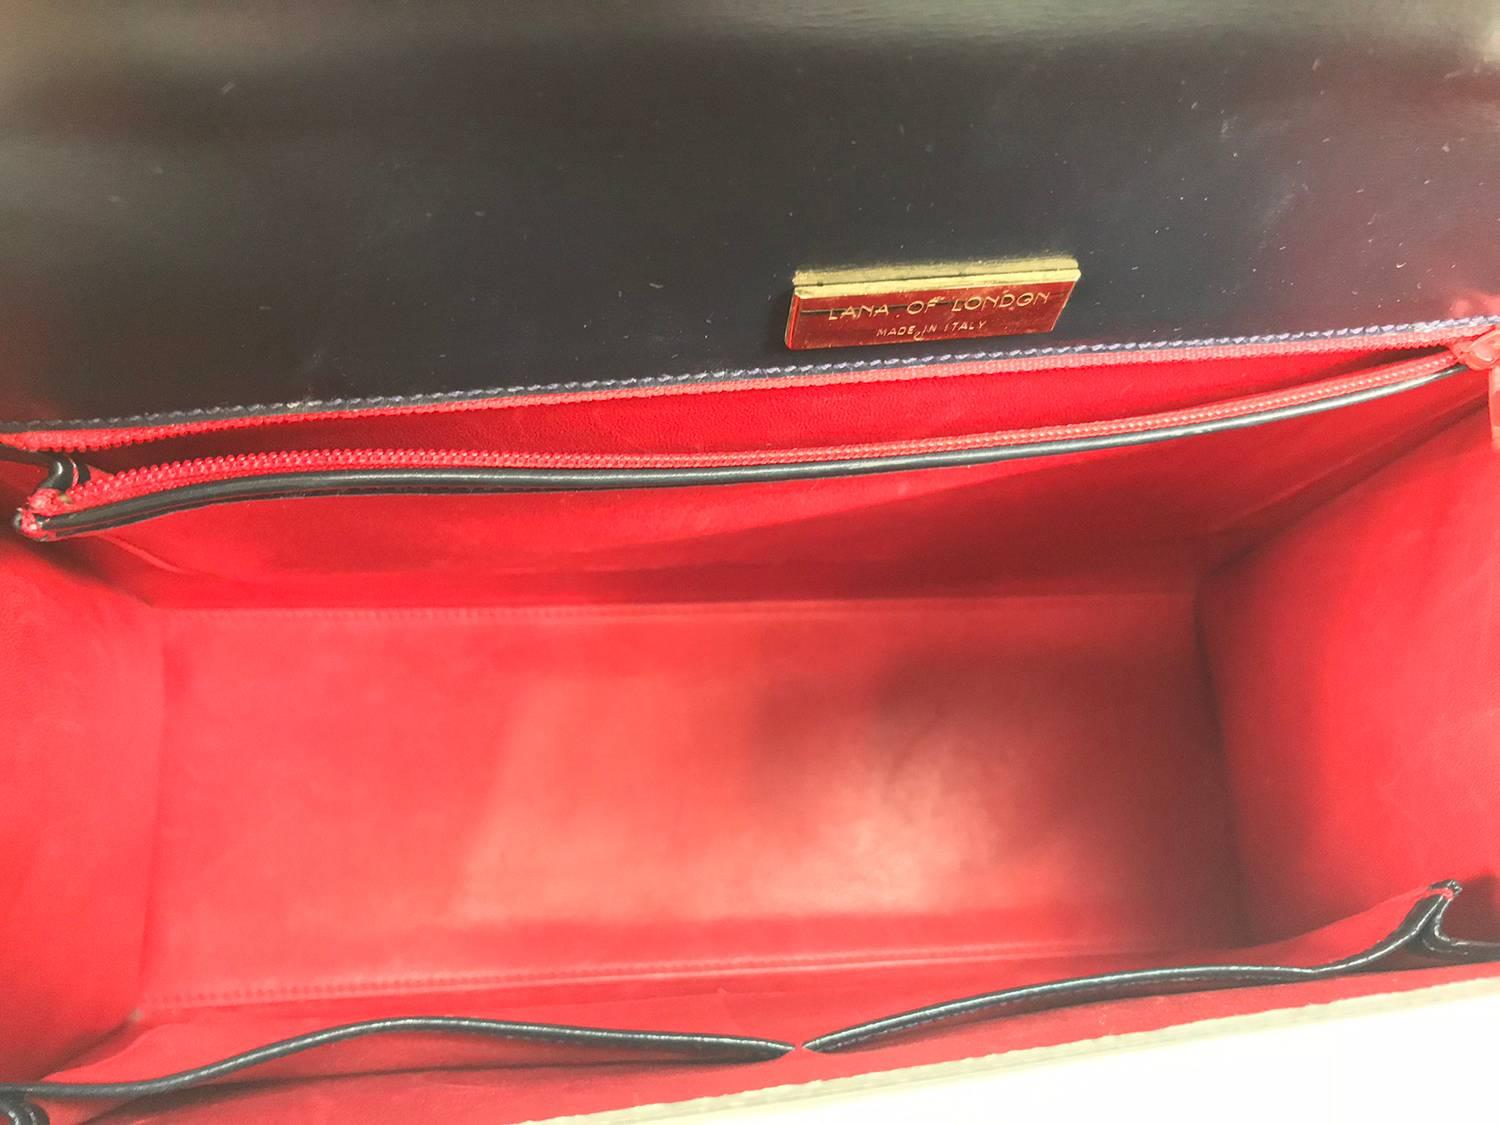 Lana of London red white and blue box calf handbag gold hardware 3